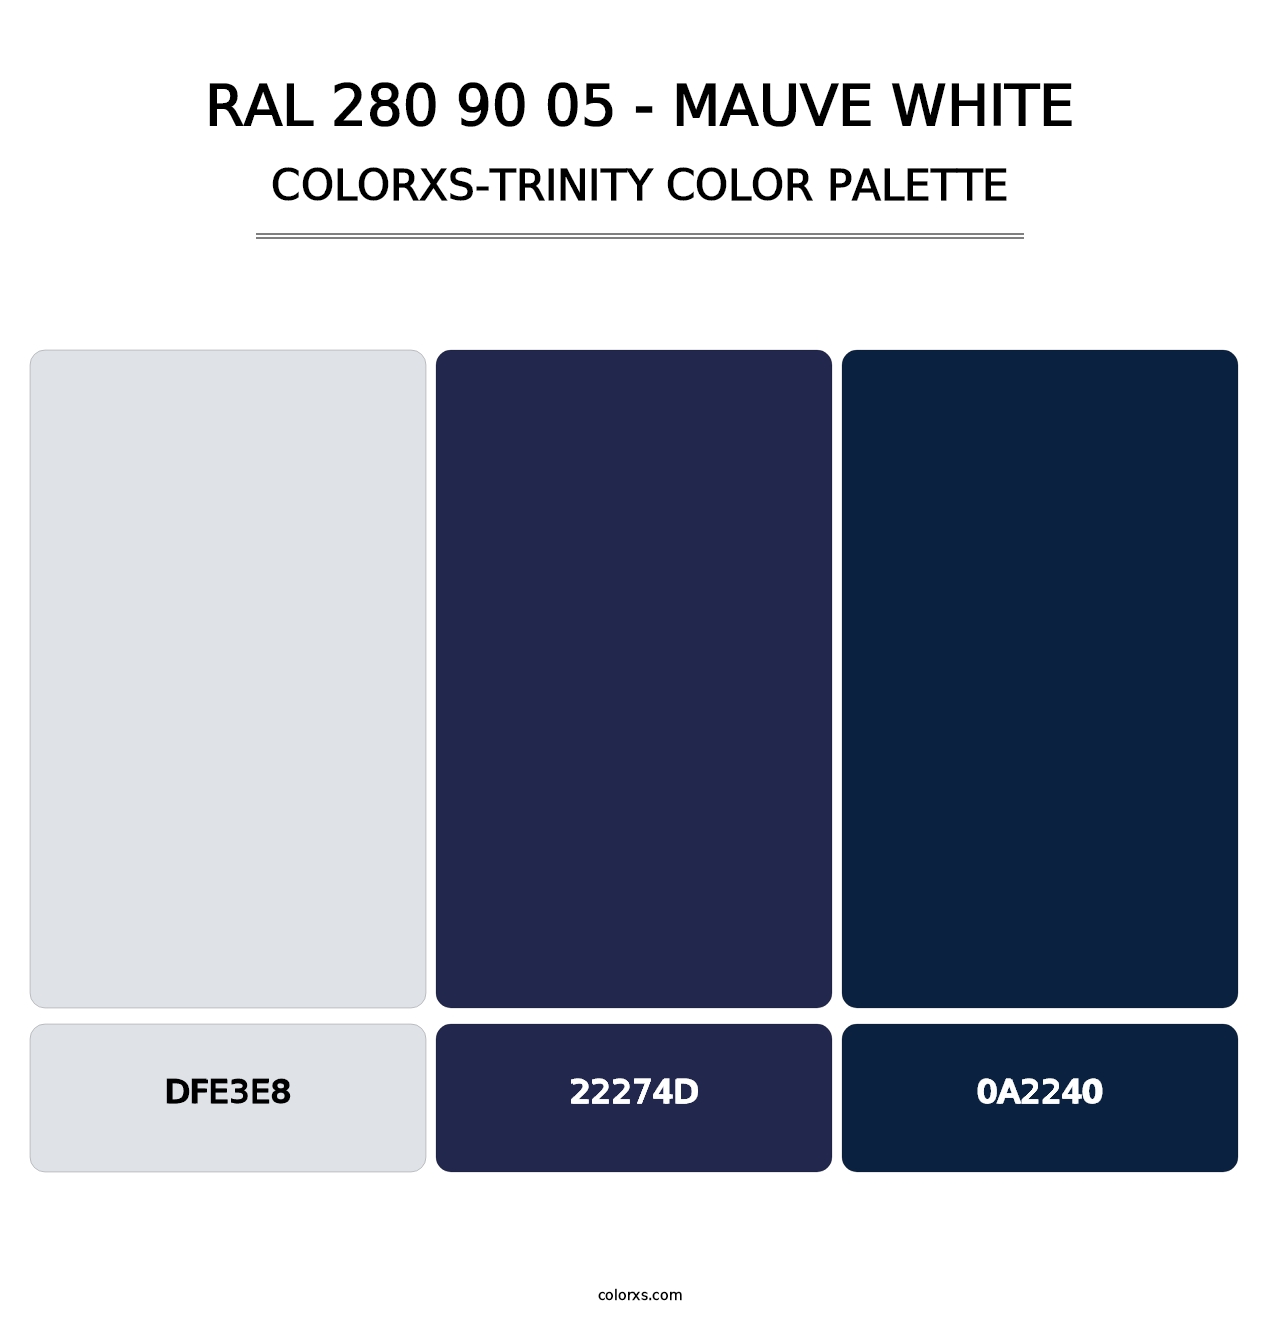 RAL 280 90 05 - Mauve White - Colorxs Trinity Palette